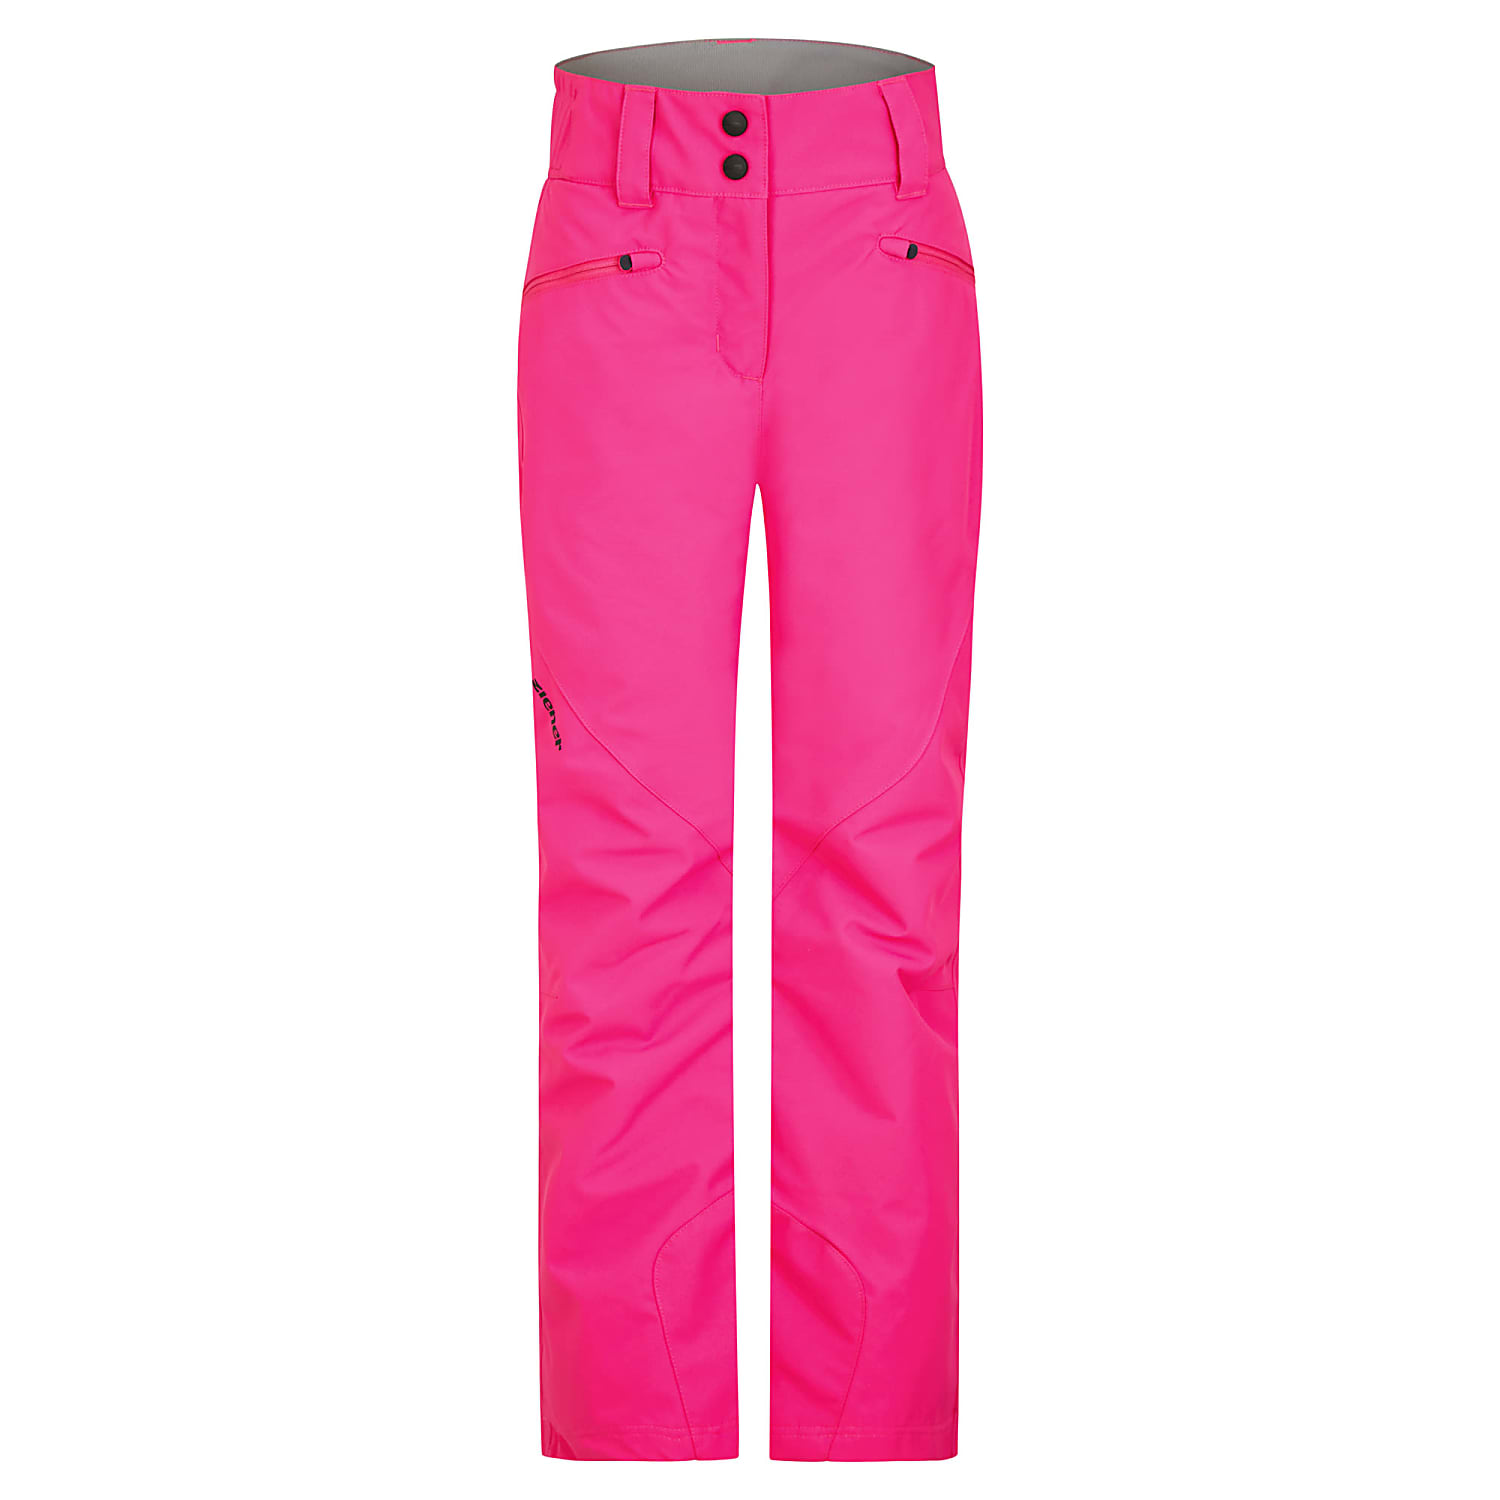 Jetzt Ziener GIRLS ALIN (PREVIOUS MODEL), Bright Pink online kaufen